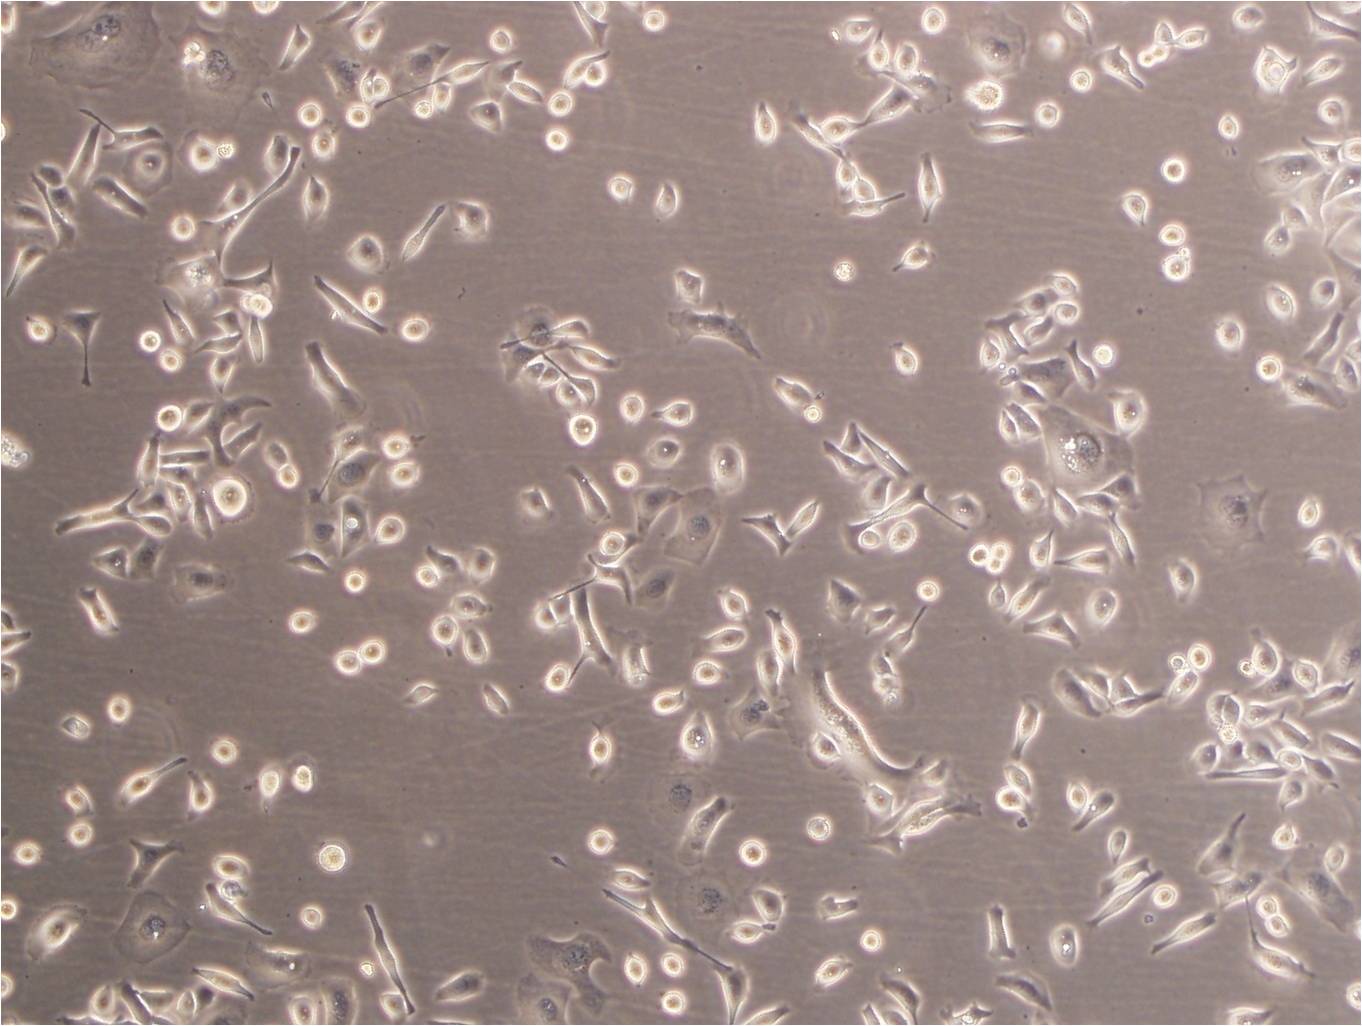 MCF-12F Cells|人乳腺上皮可传代细胞系